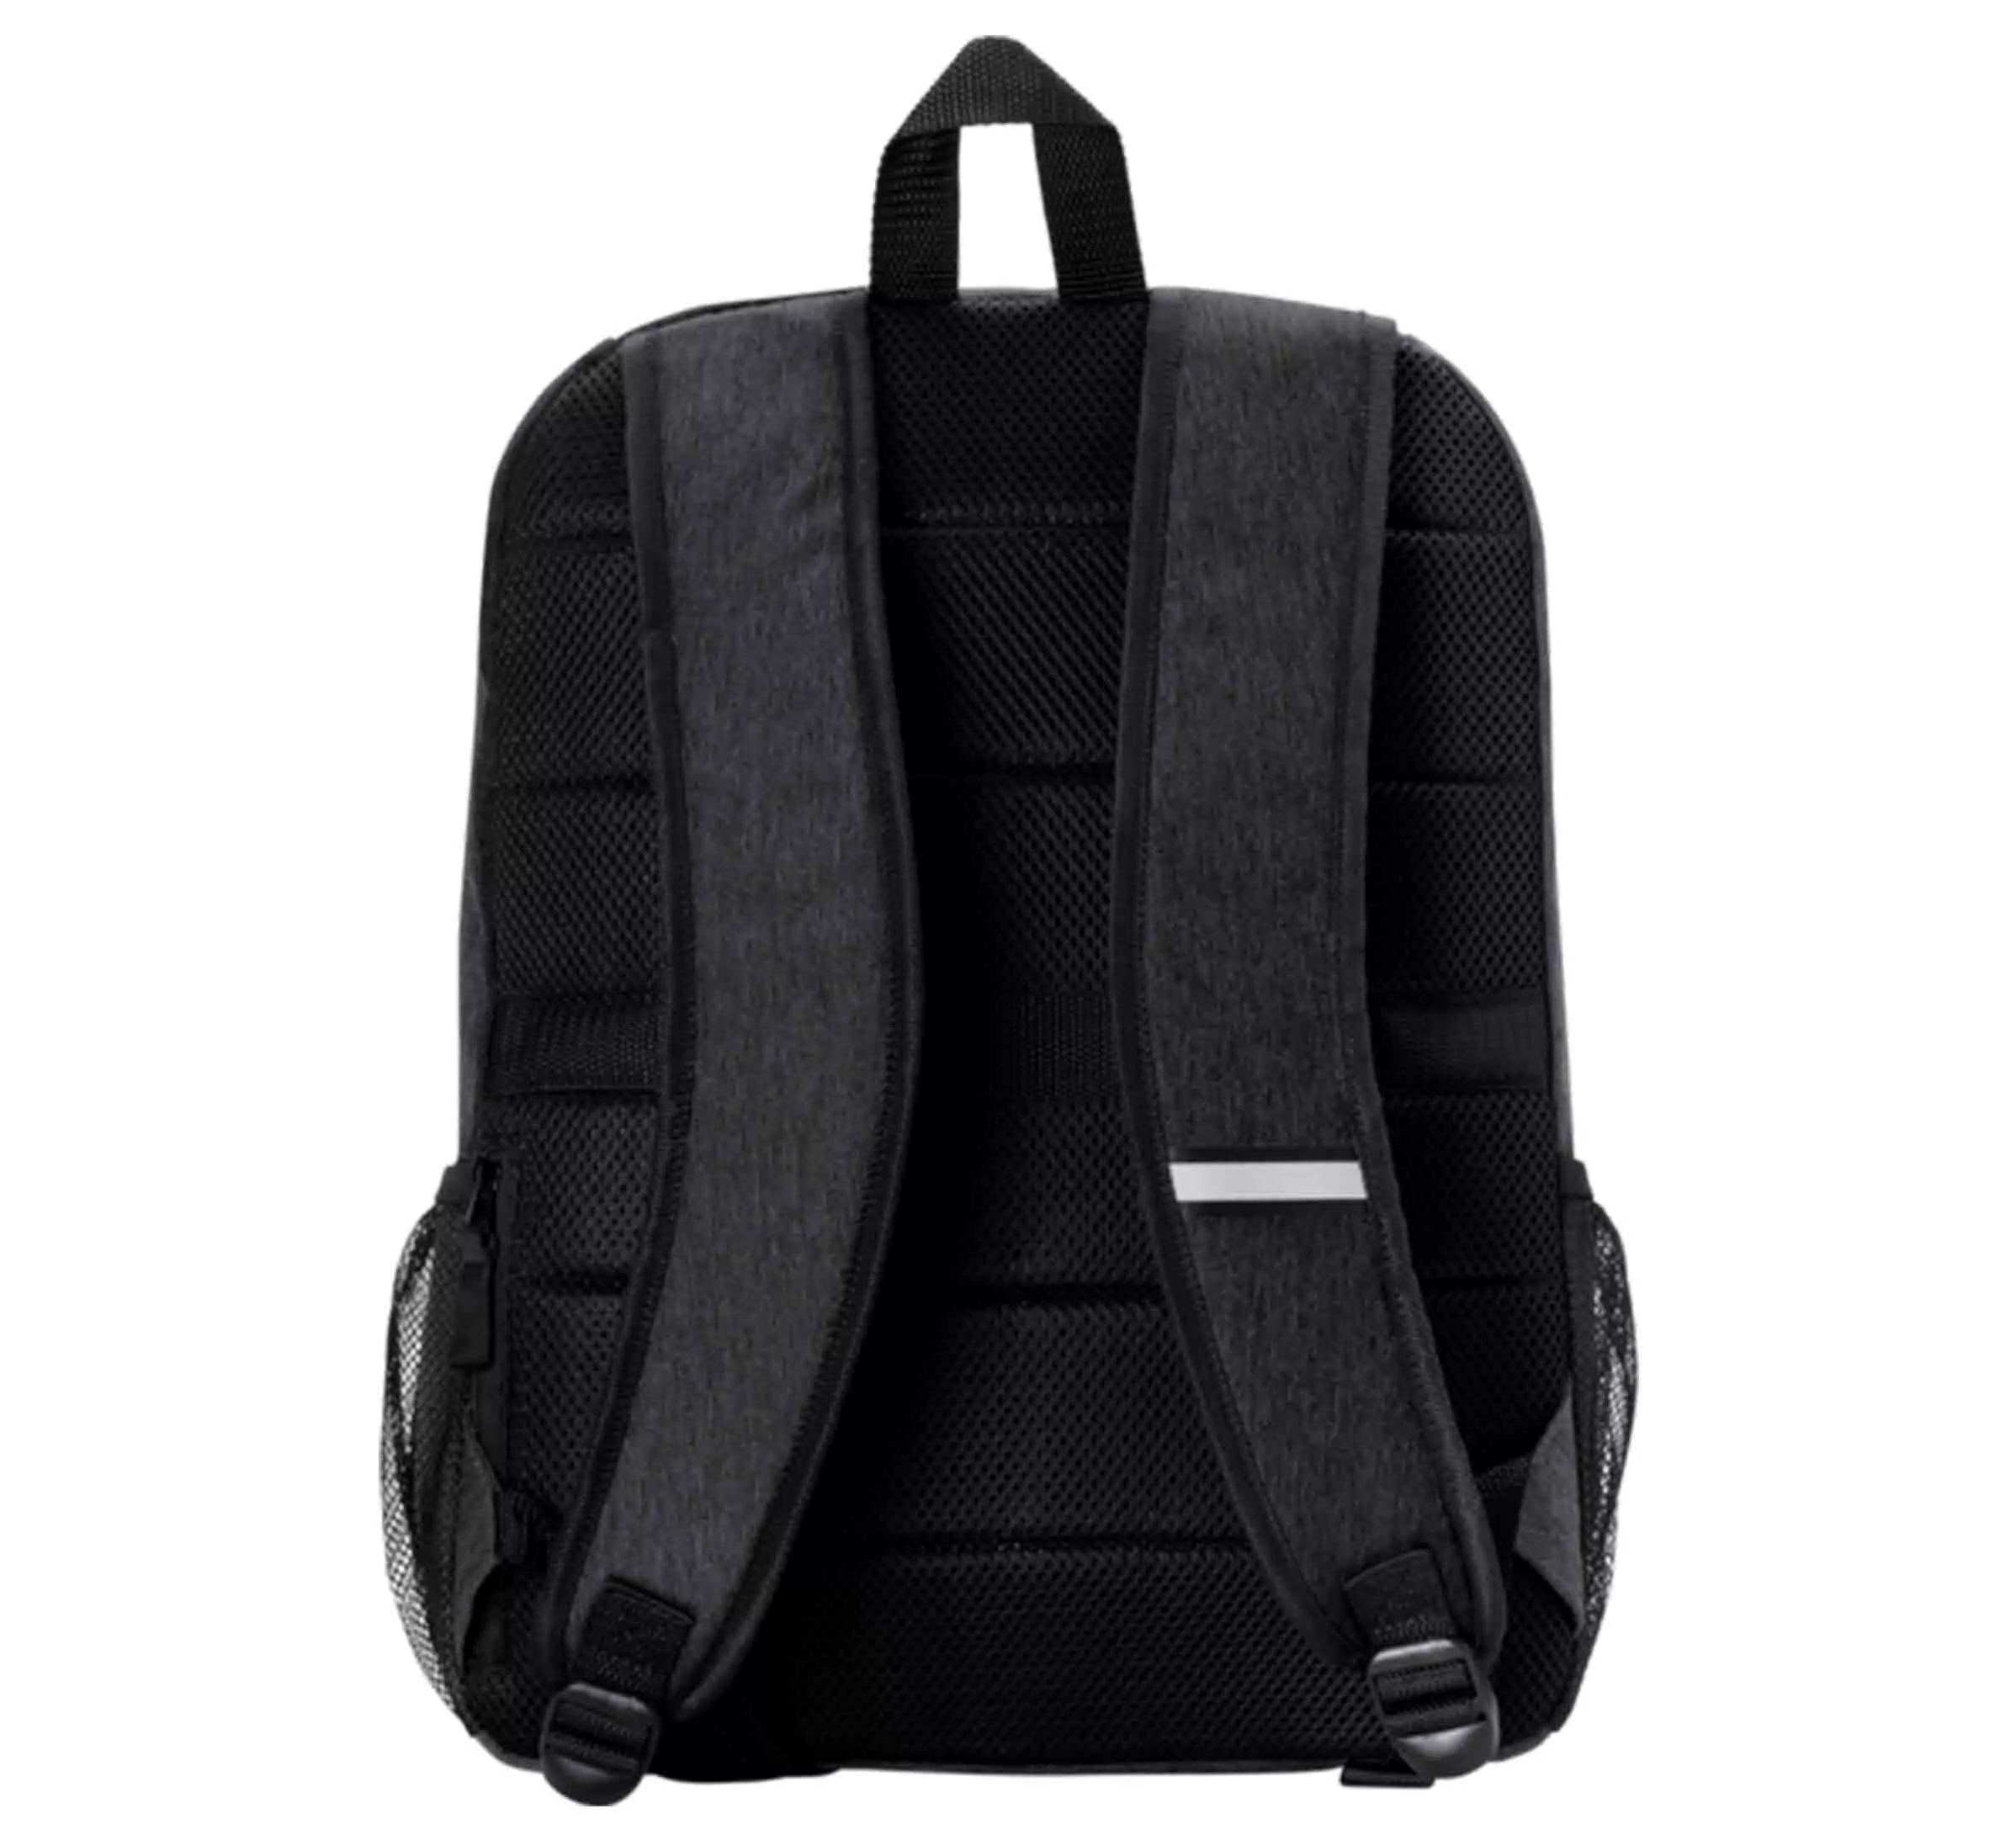 HP mochila para notebook │ Tamaño 15.6”  │ Recycle Backpack